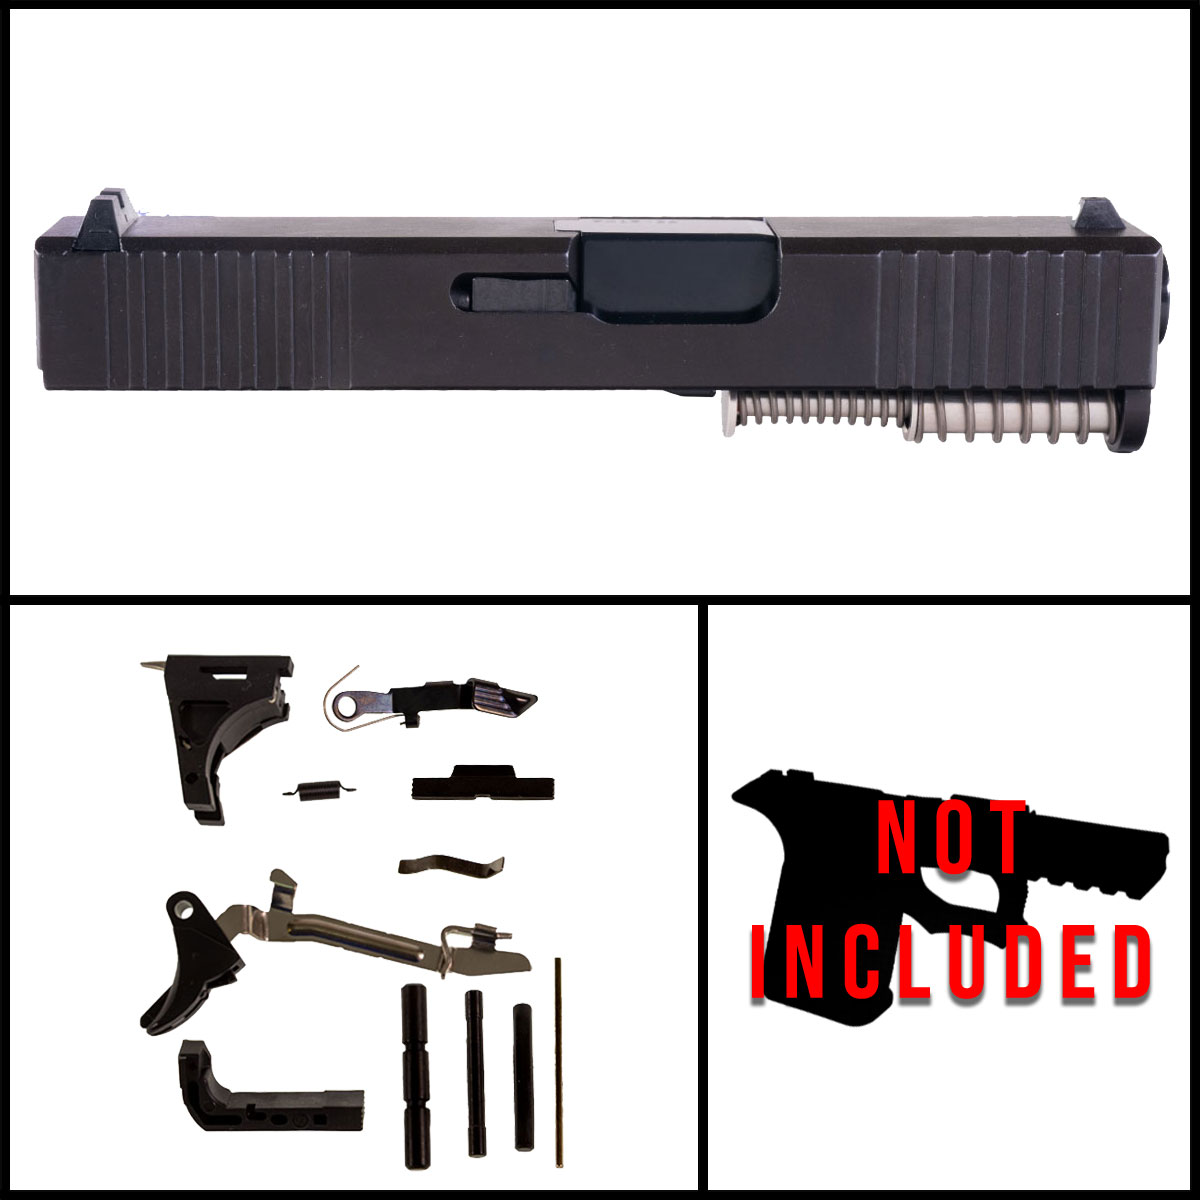 DDS 'Burly' 9mm Full Pistol Build Kit (Everything Minus Frame) - Glock 26 Gen 1-2 Compatible